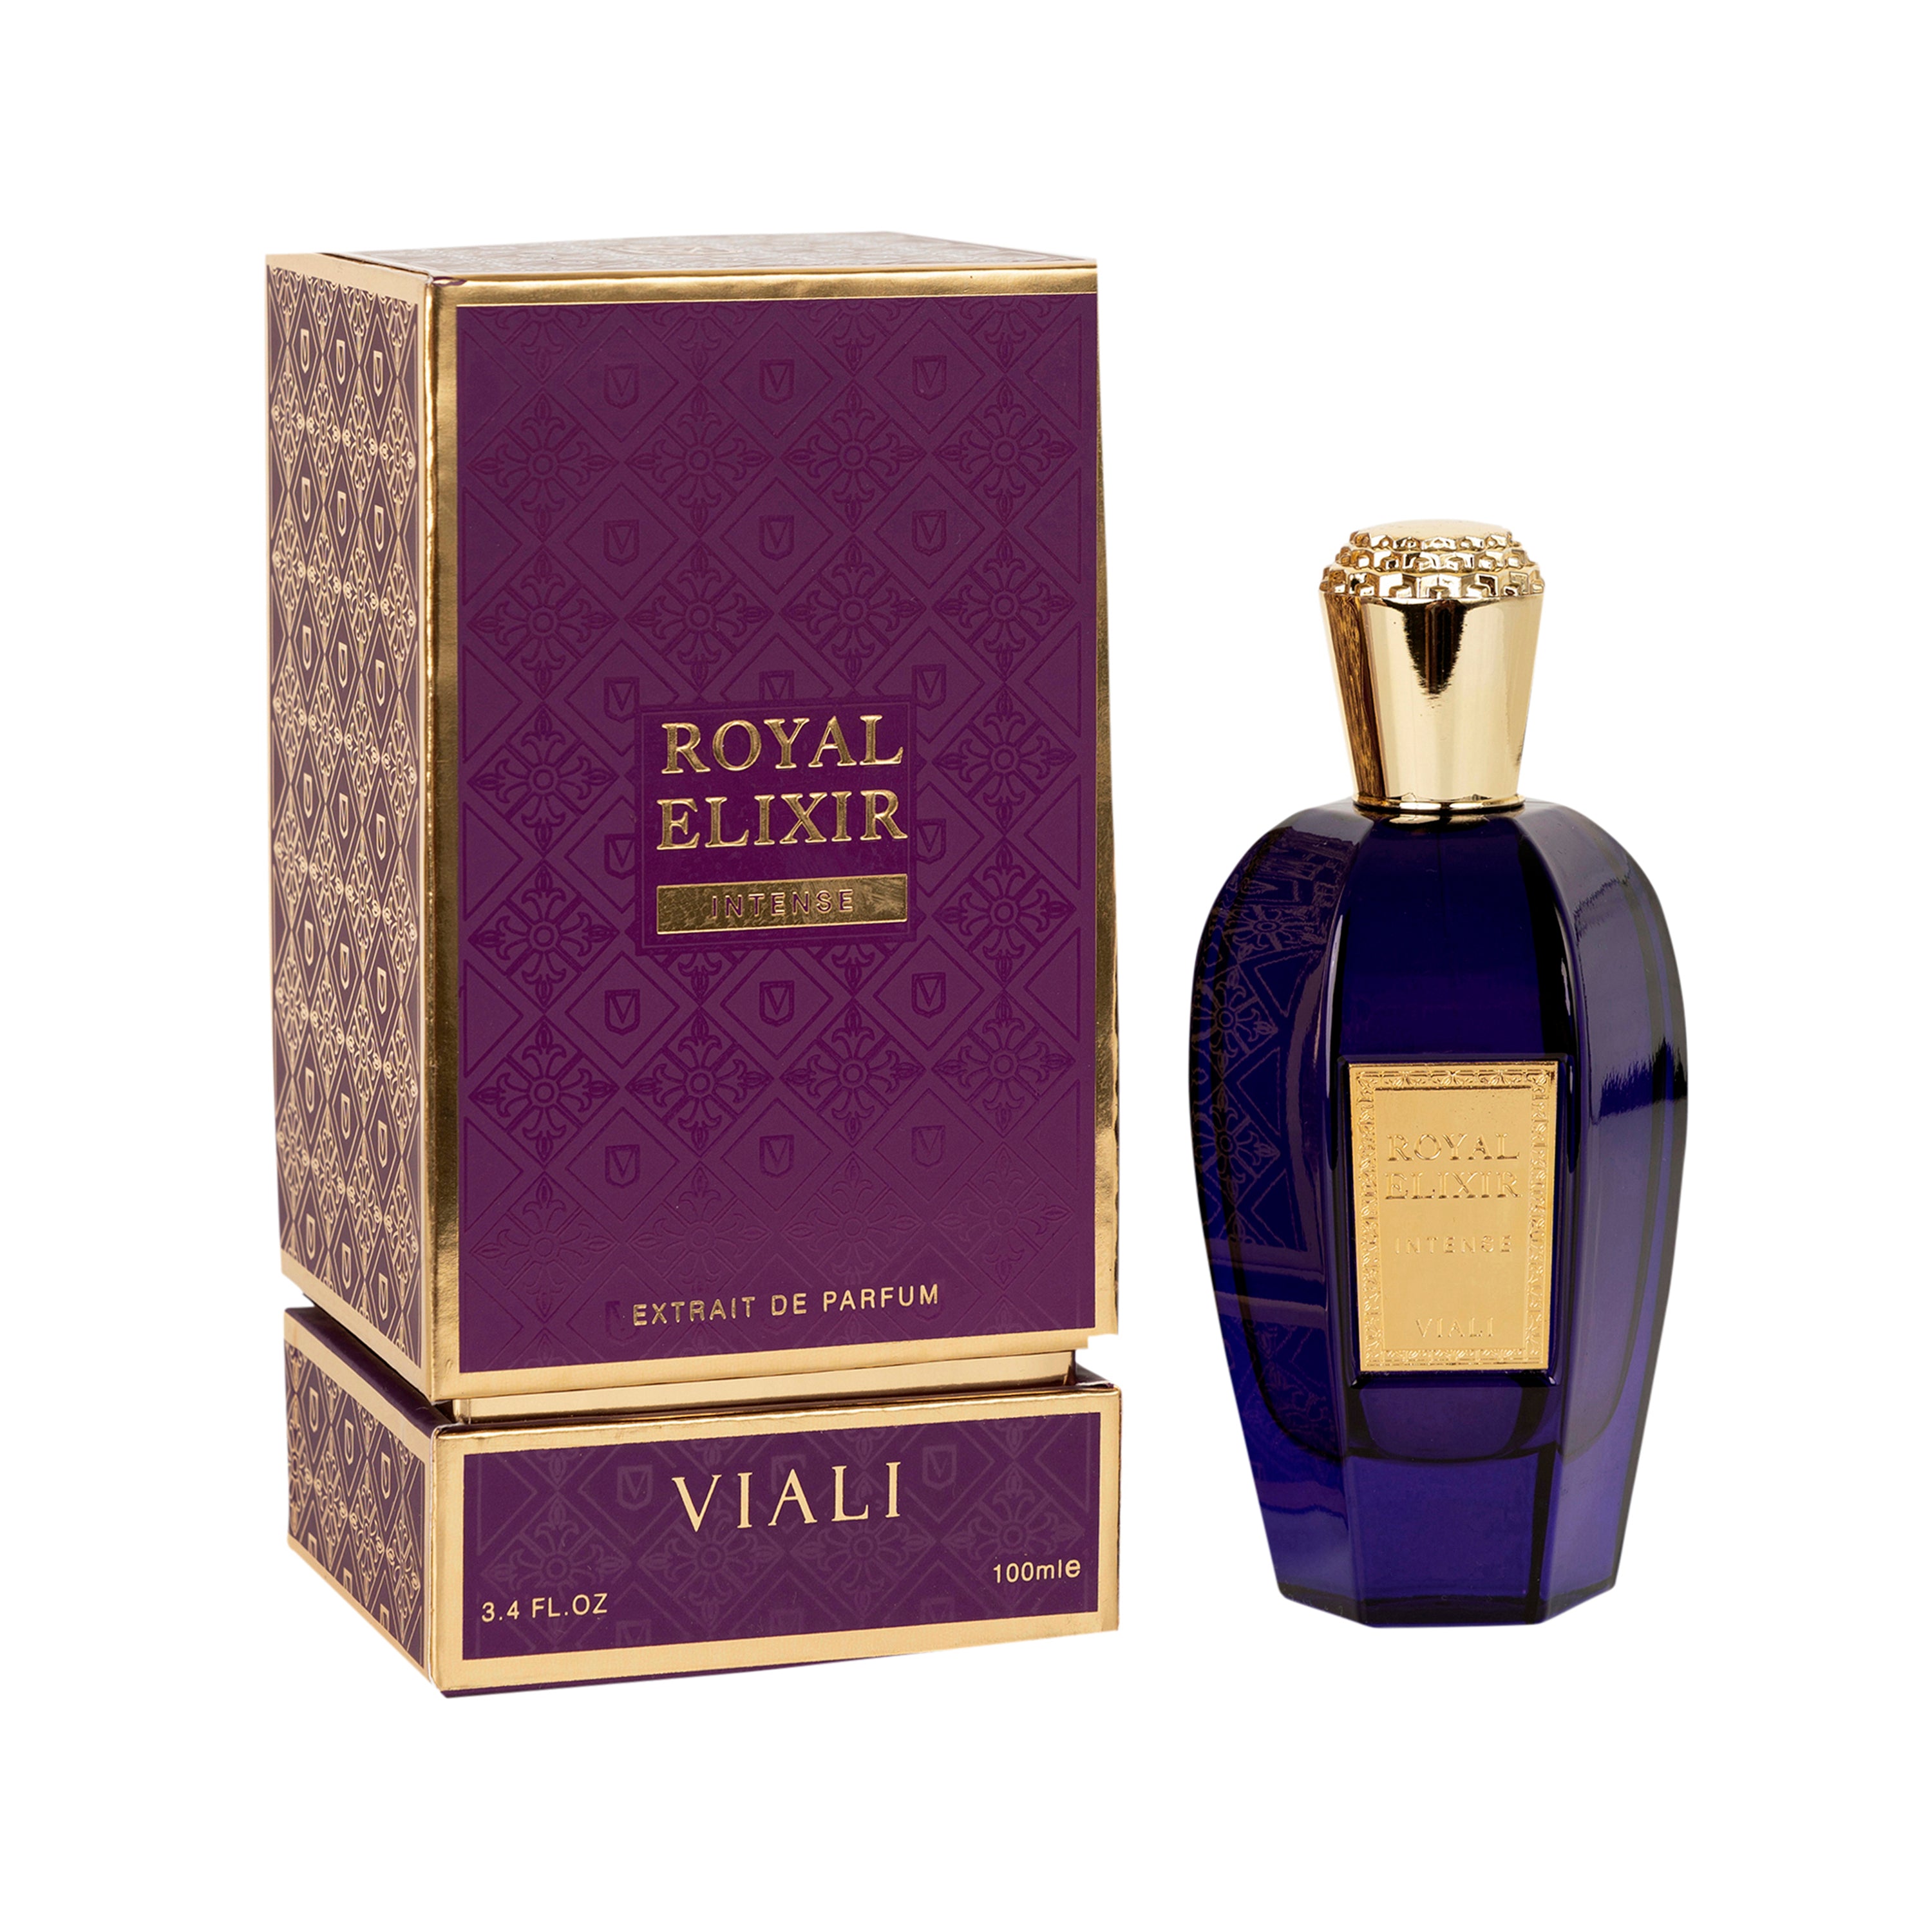 Viali Royal Elixir Intense Extrait de Parfum 100ml